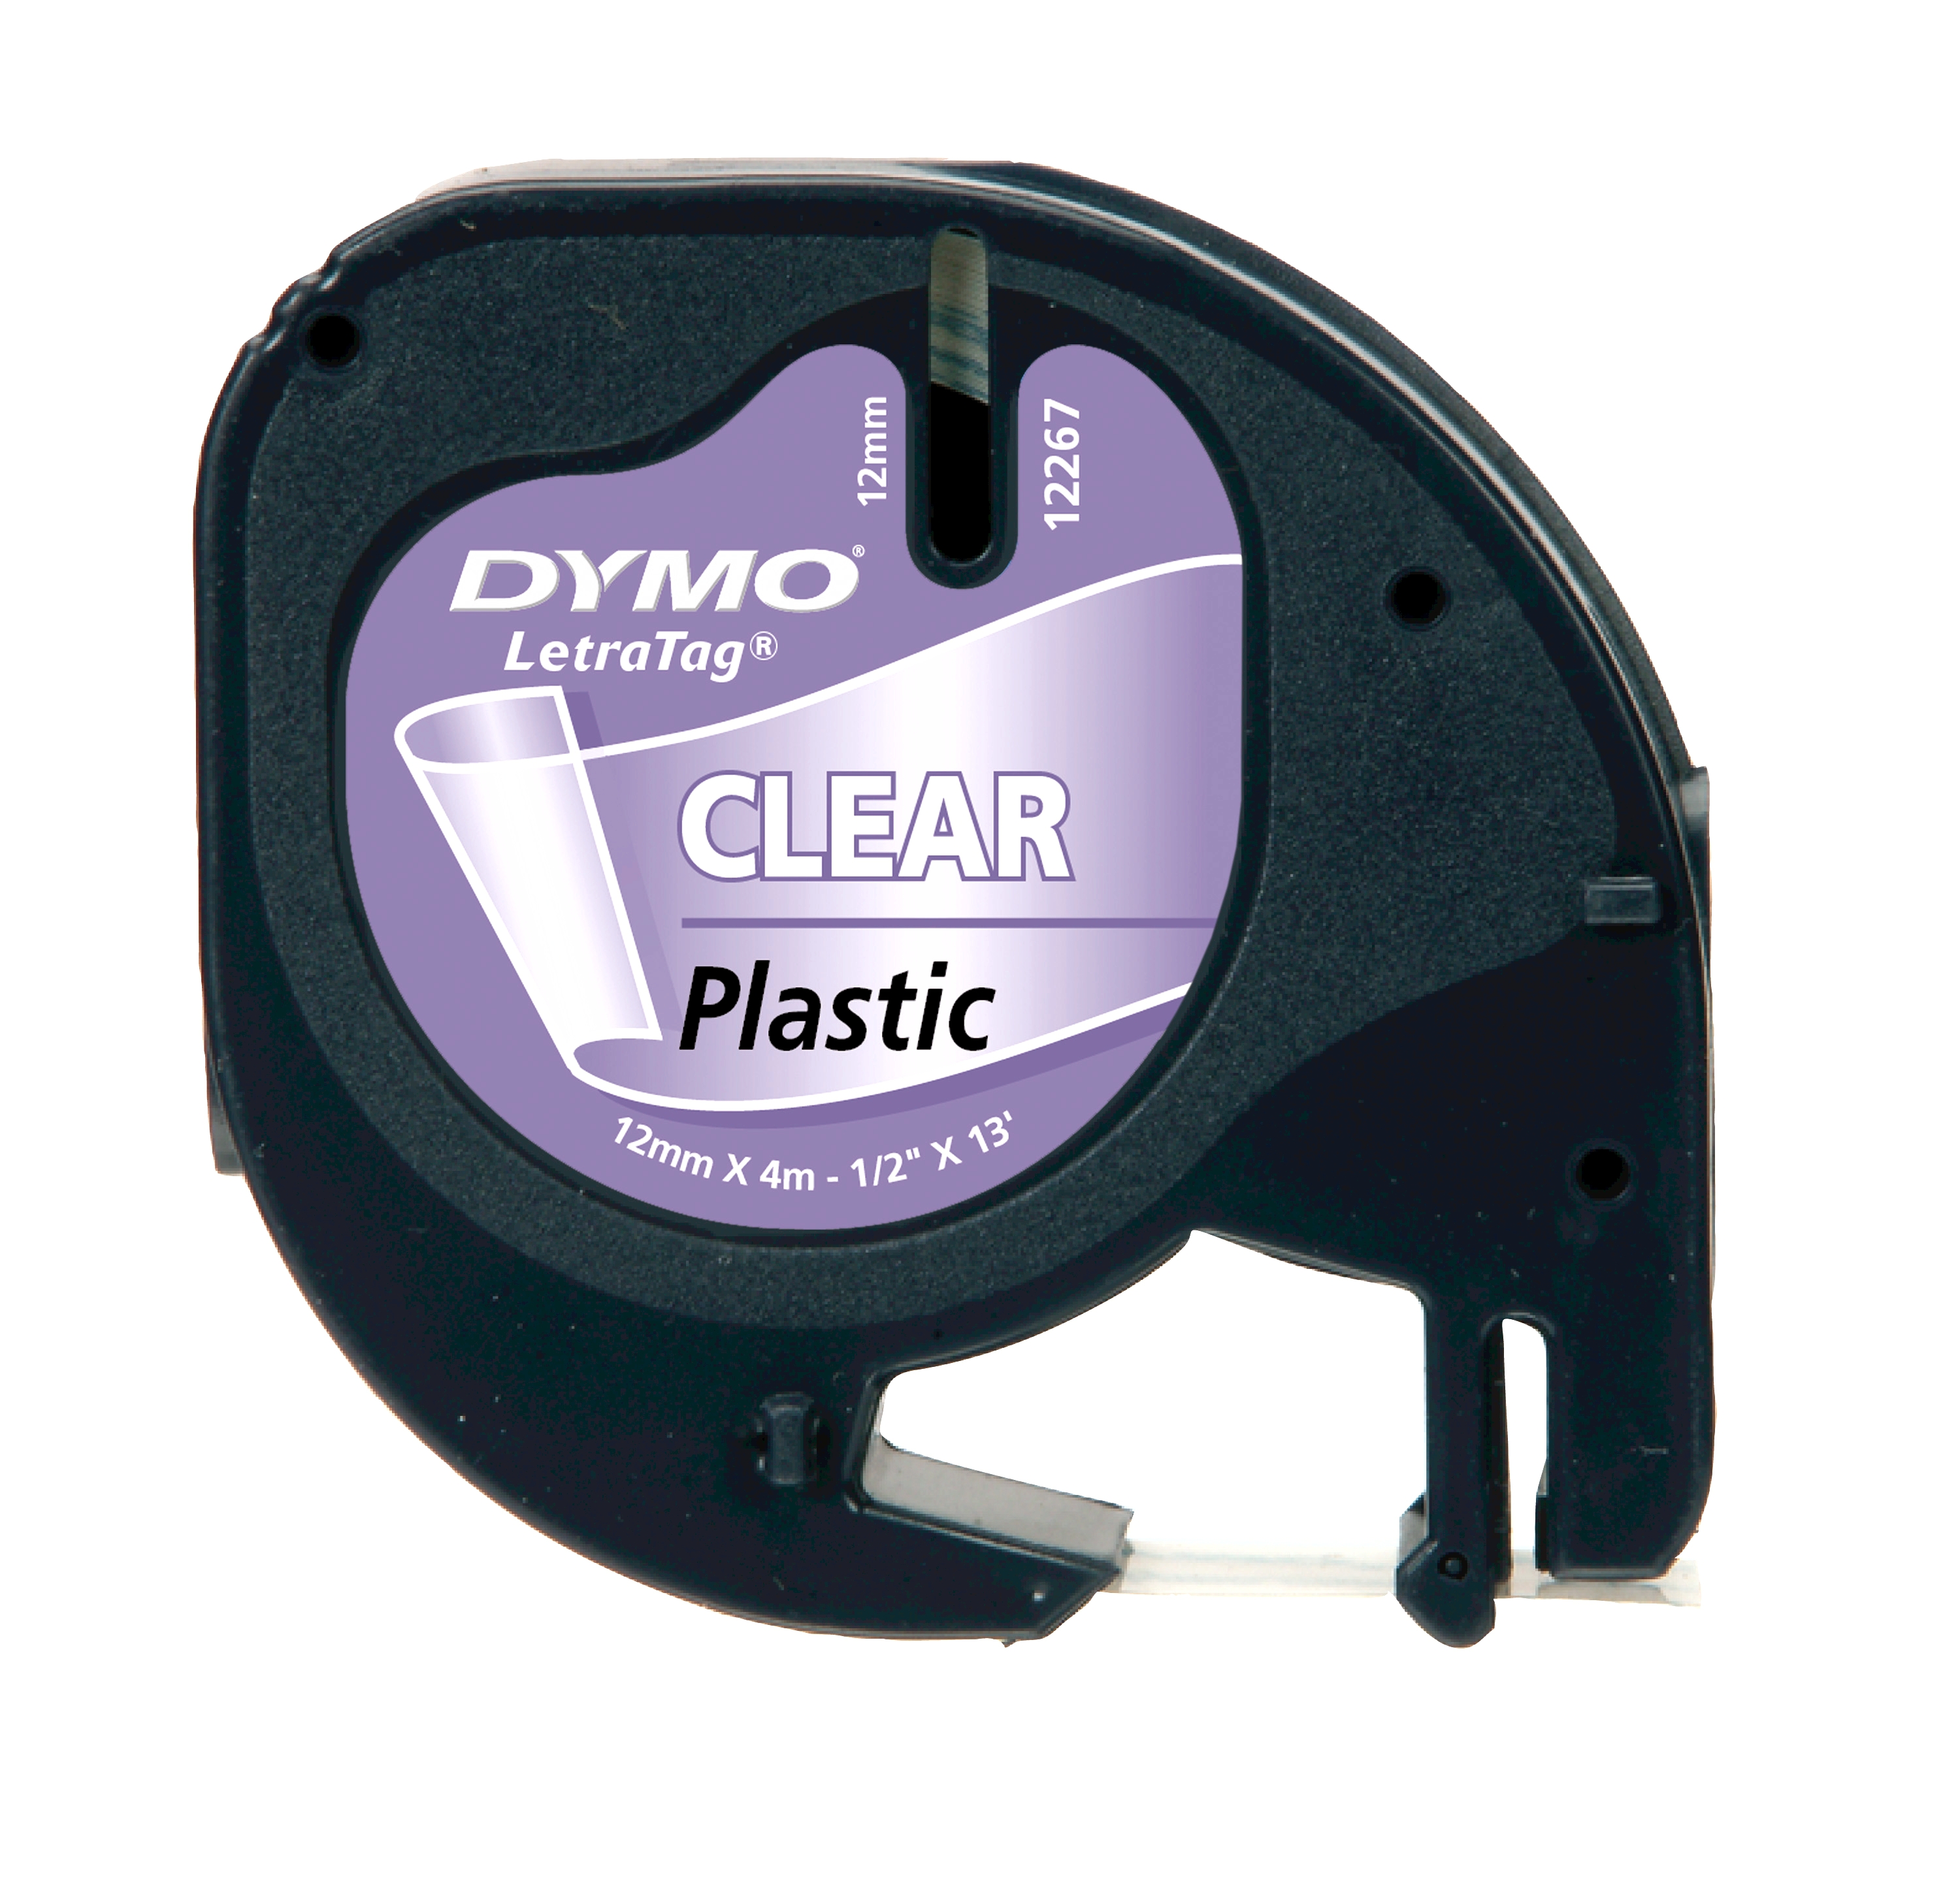 Dymo originální páska do tiskárny štítků, Dymo, 12267, S0721530, černý tisk/průhledný podklad, 4m, 12mm, LetraTag plastová páska